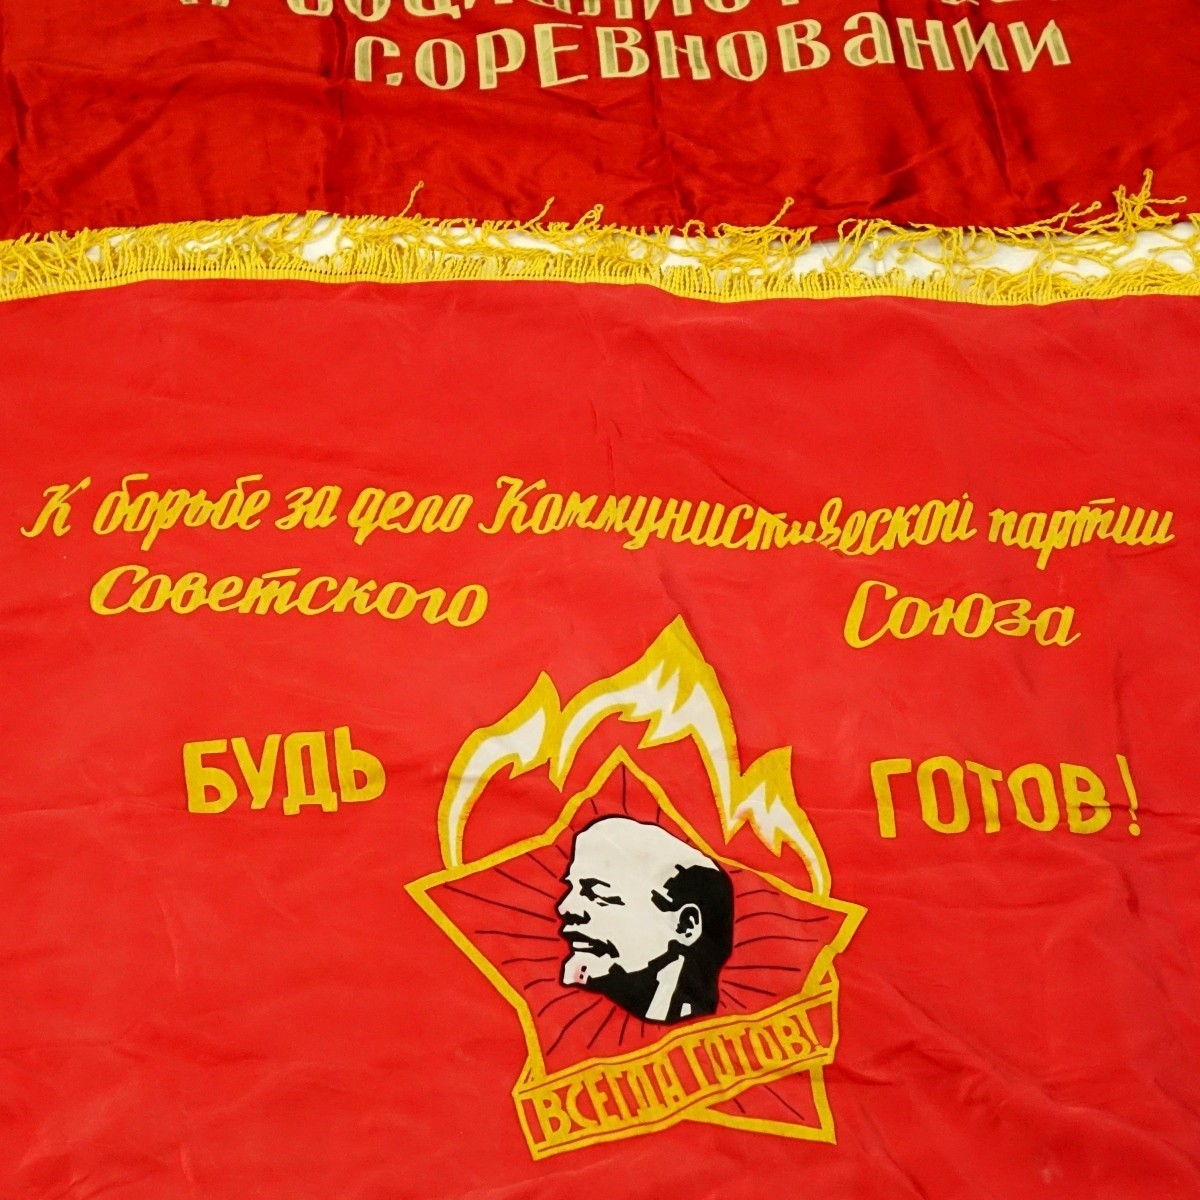 Four Soviet Era Propaganda Items